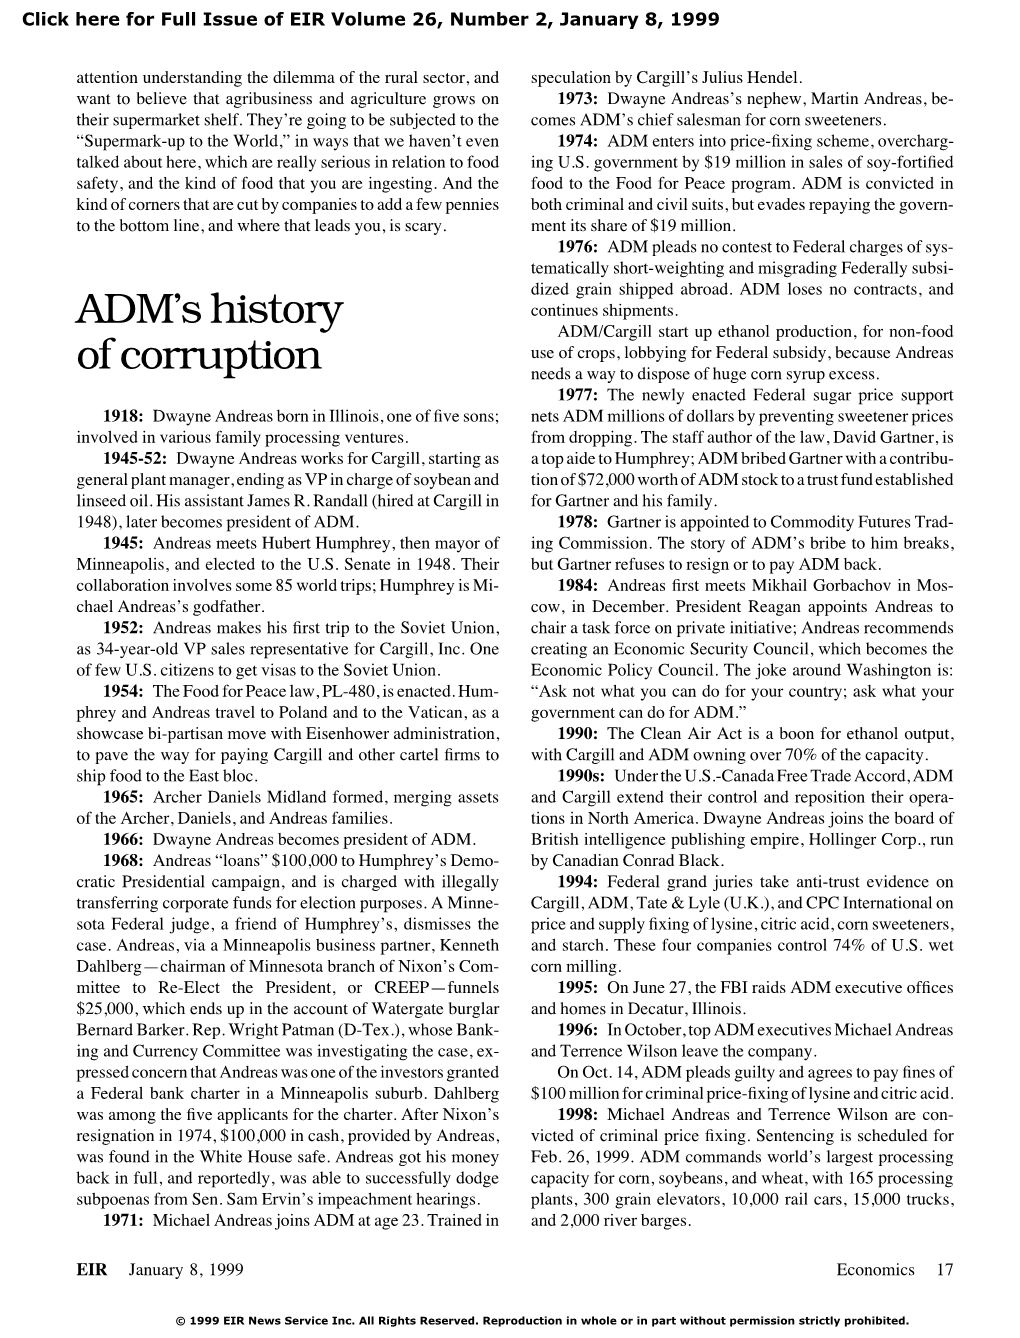 ADM's History of Corruption